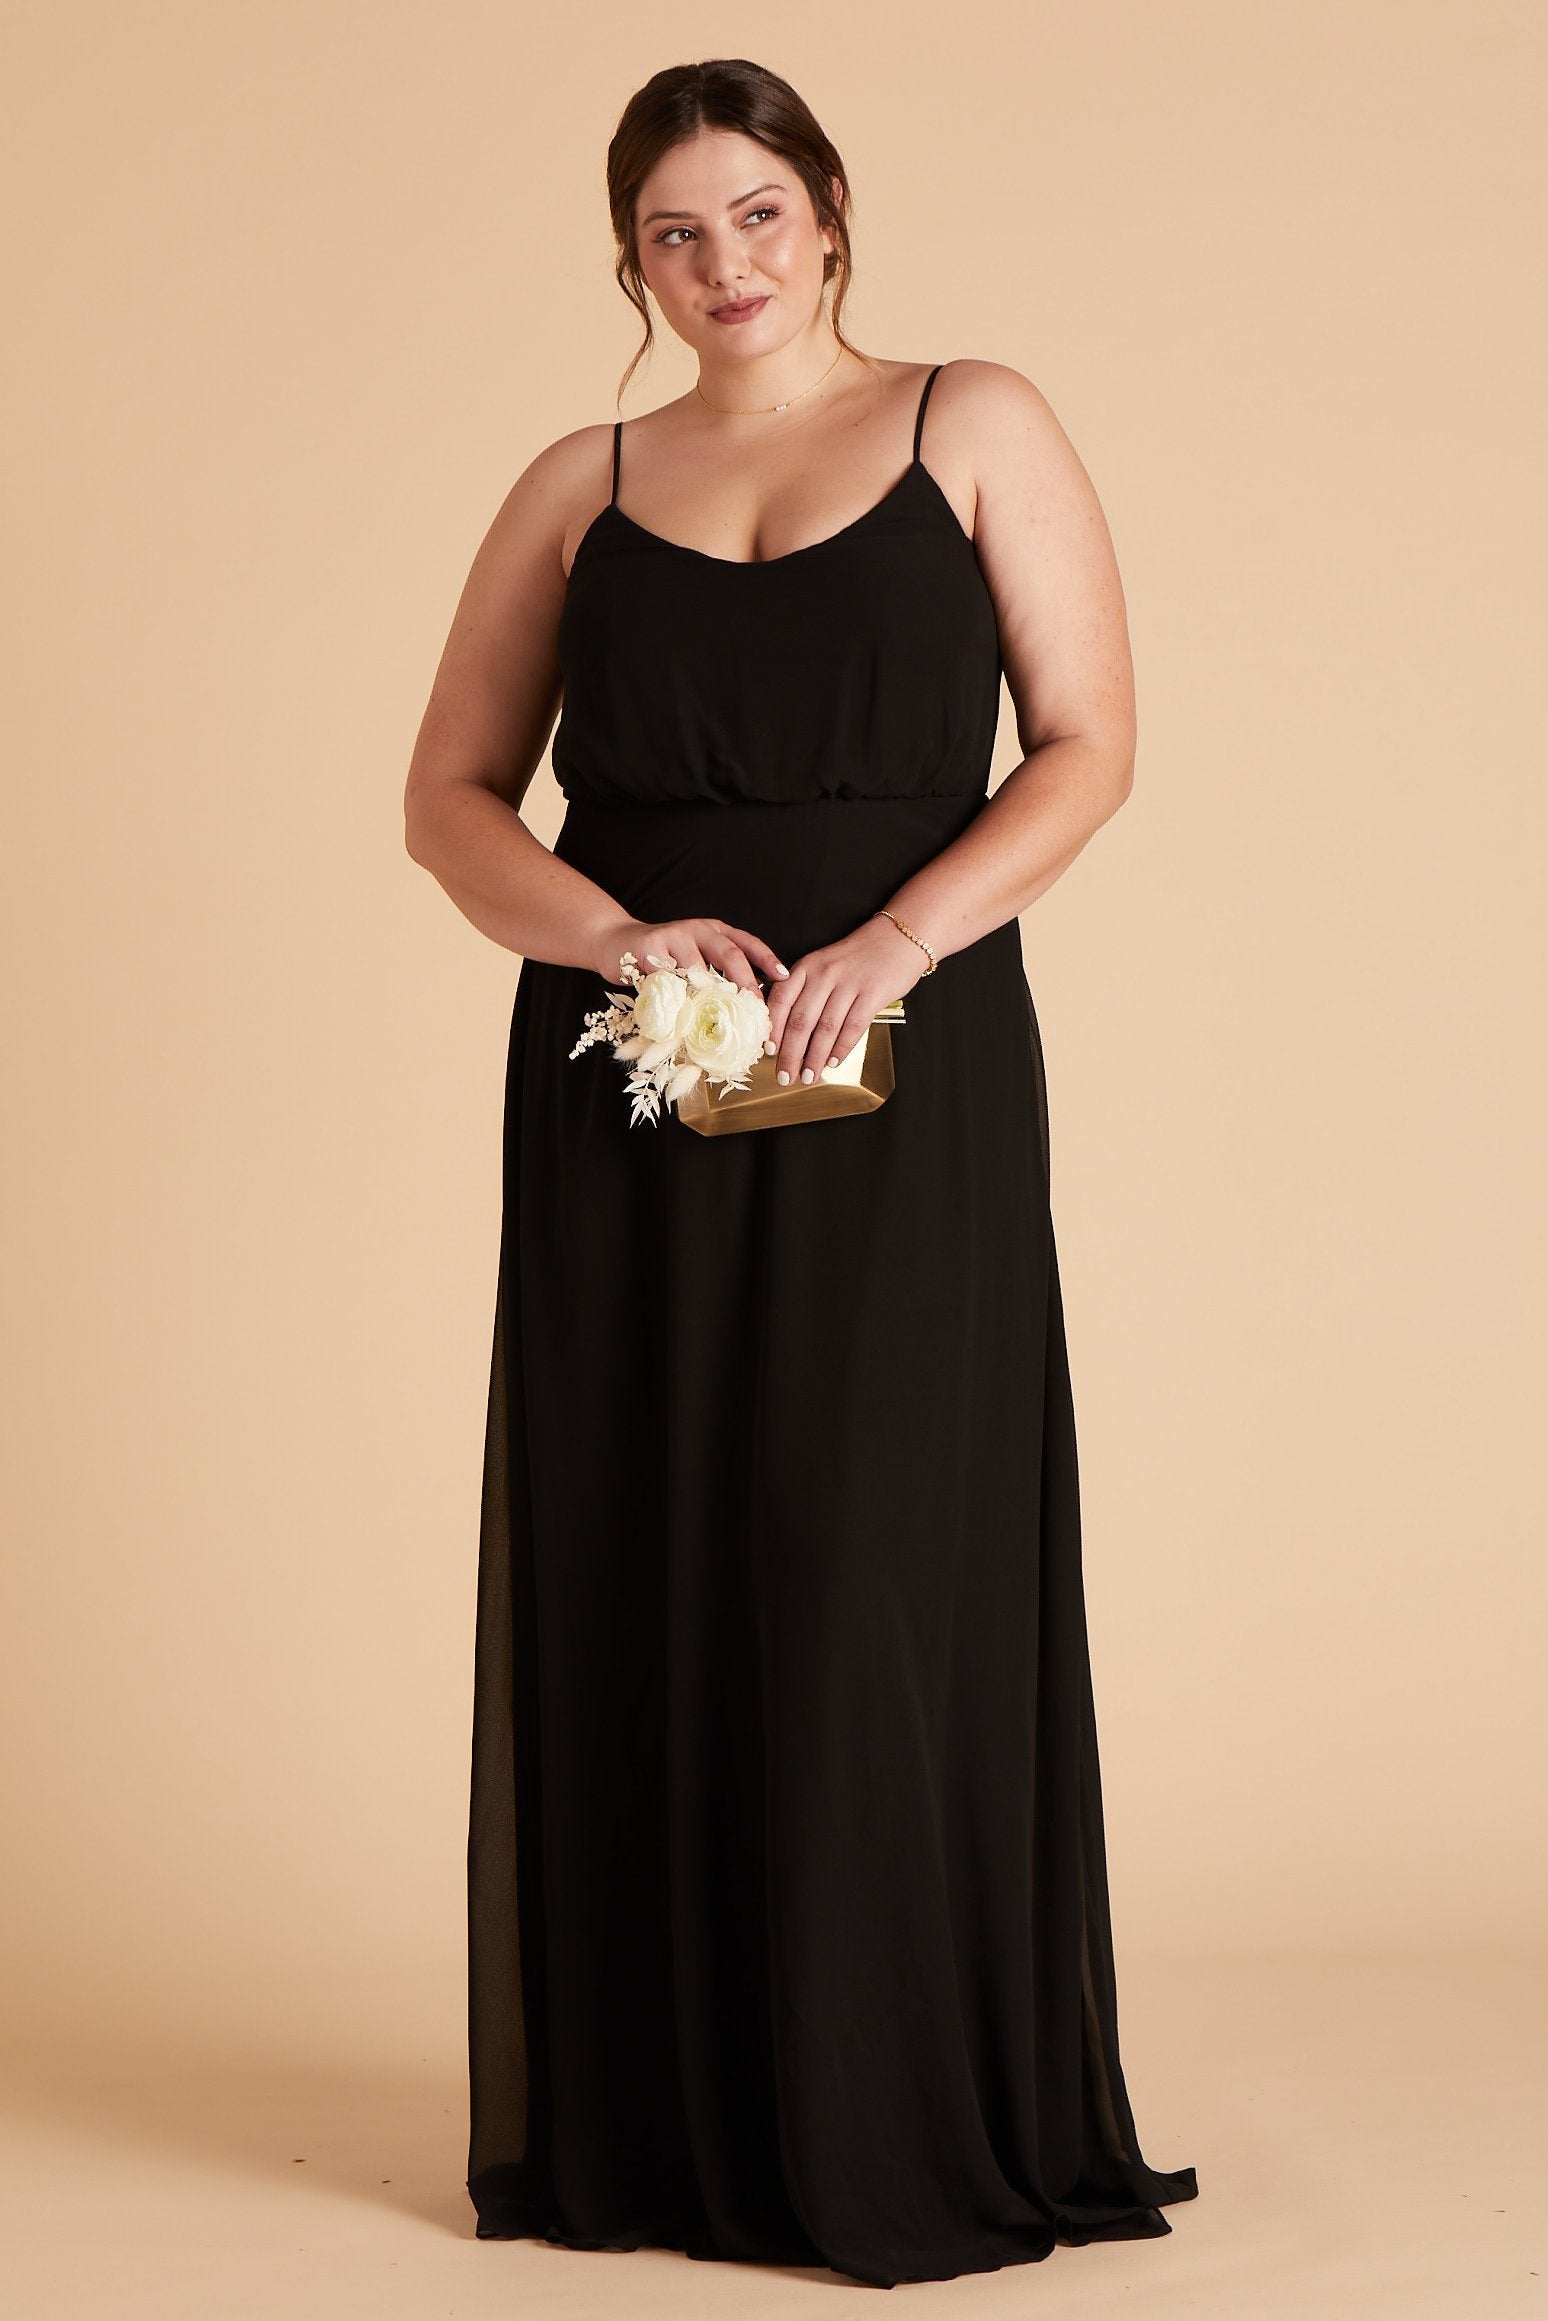 Gwennie plus size bridesmaid dress in black chiffon by Birdy Grey, front view